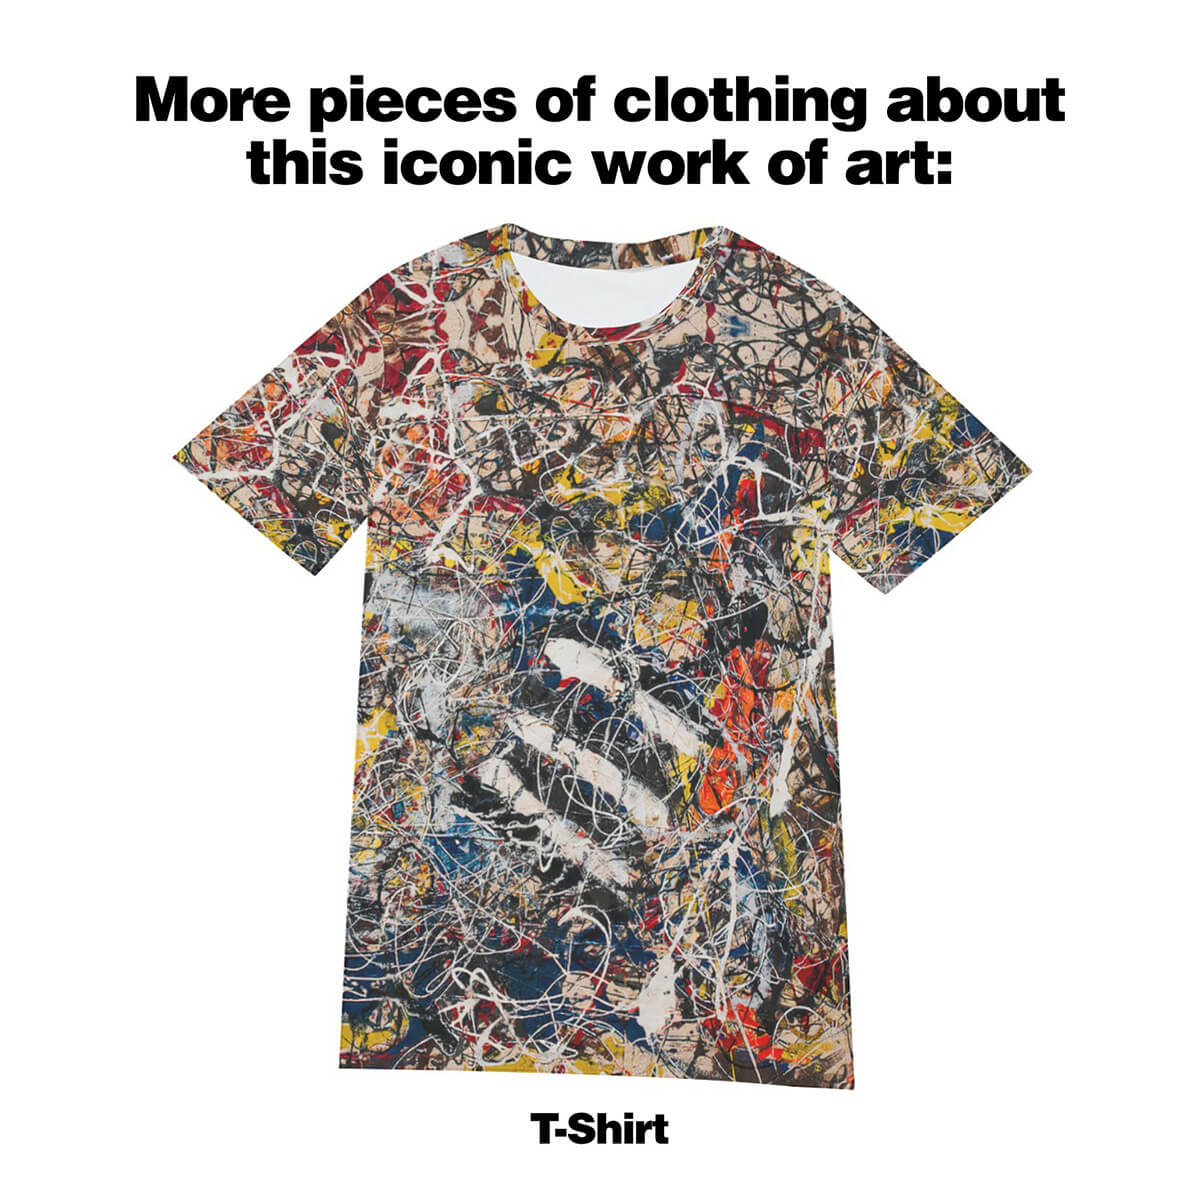 Číslo 17A od Jacksona Pollocka Art Premium Posters